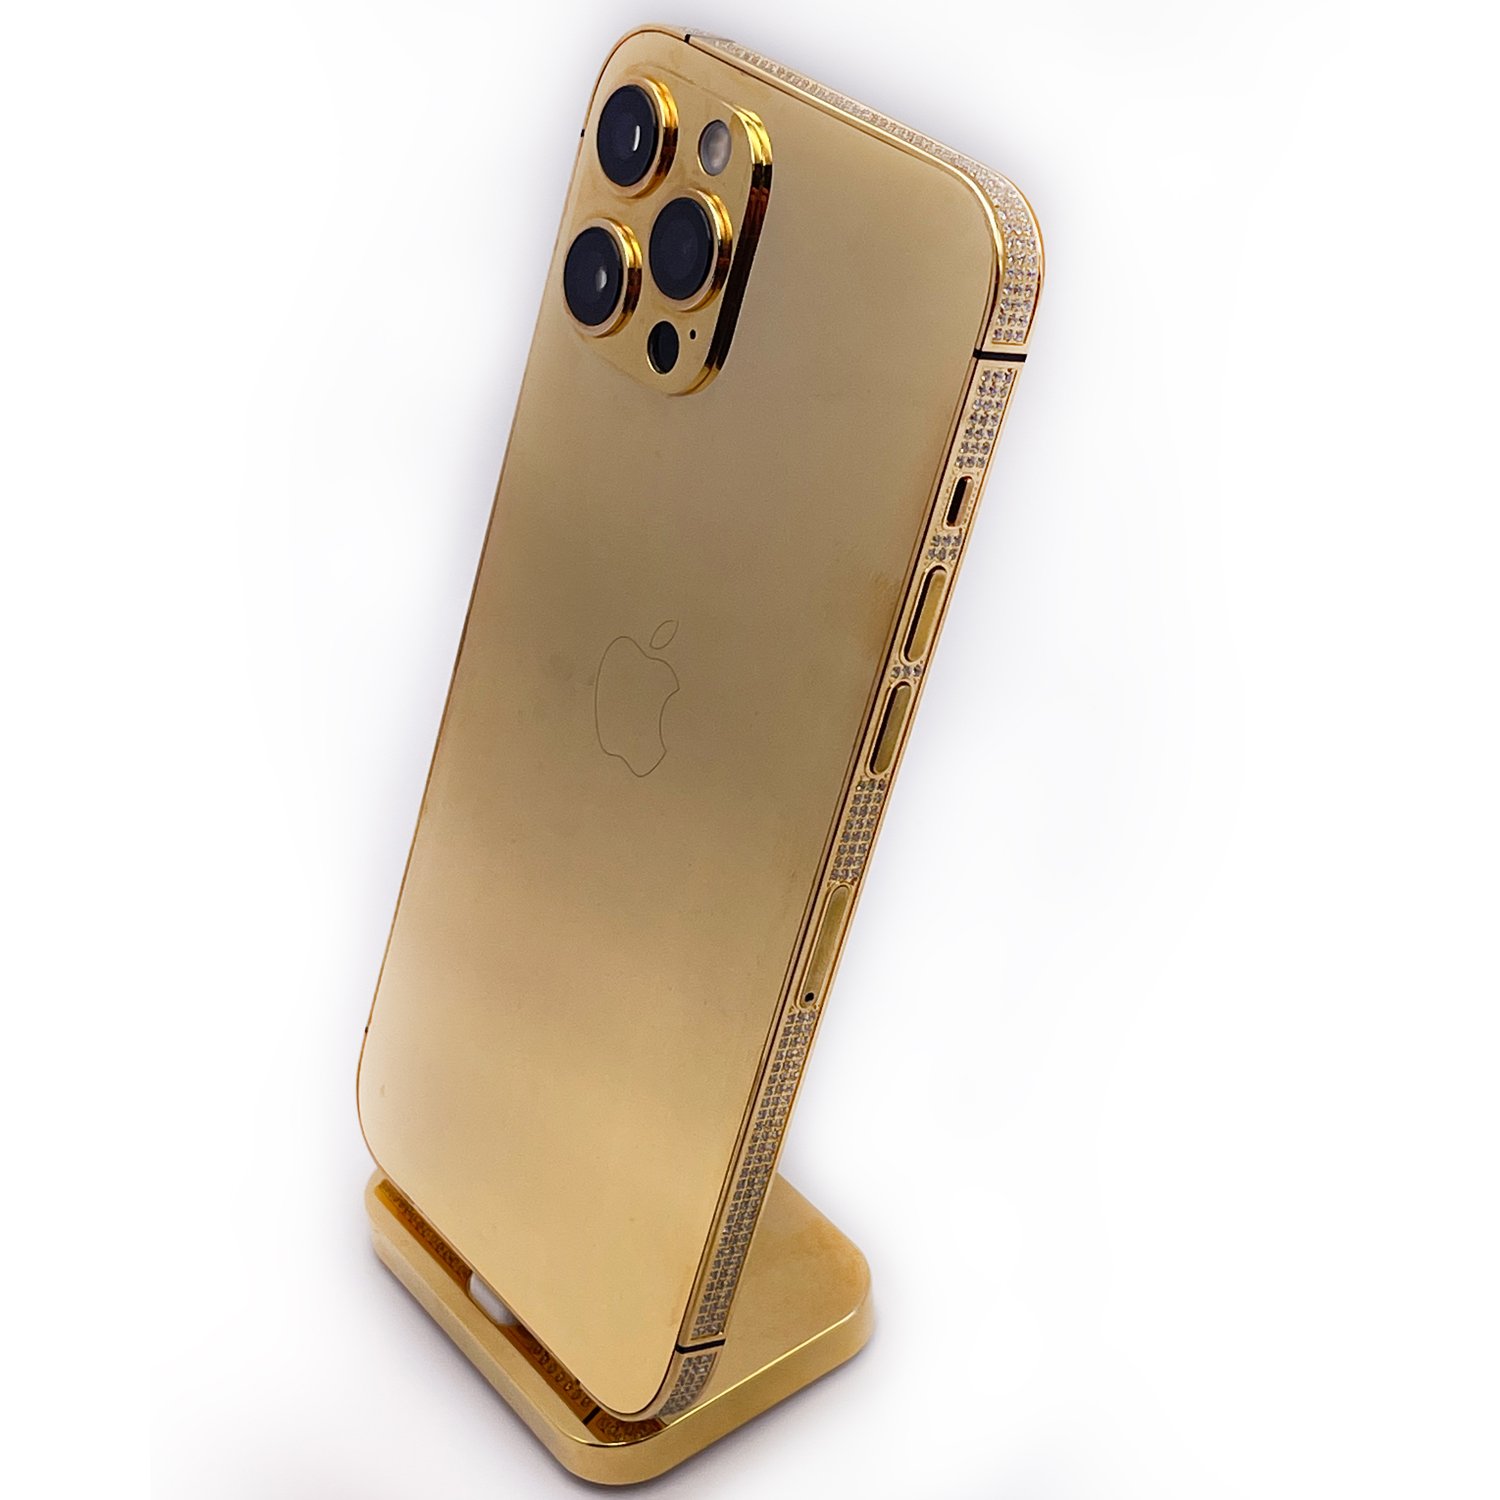 iPhone 12 Pro Max 512gb 24k Gold Plated Diamond Edition